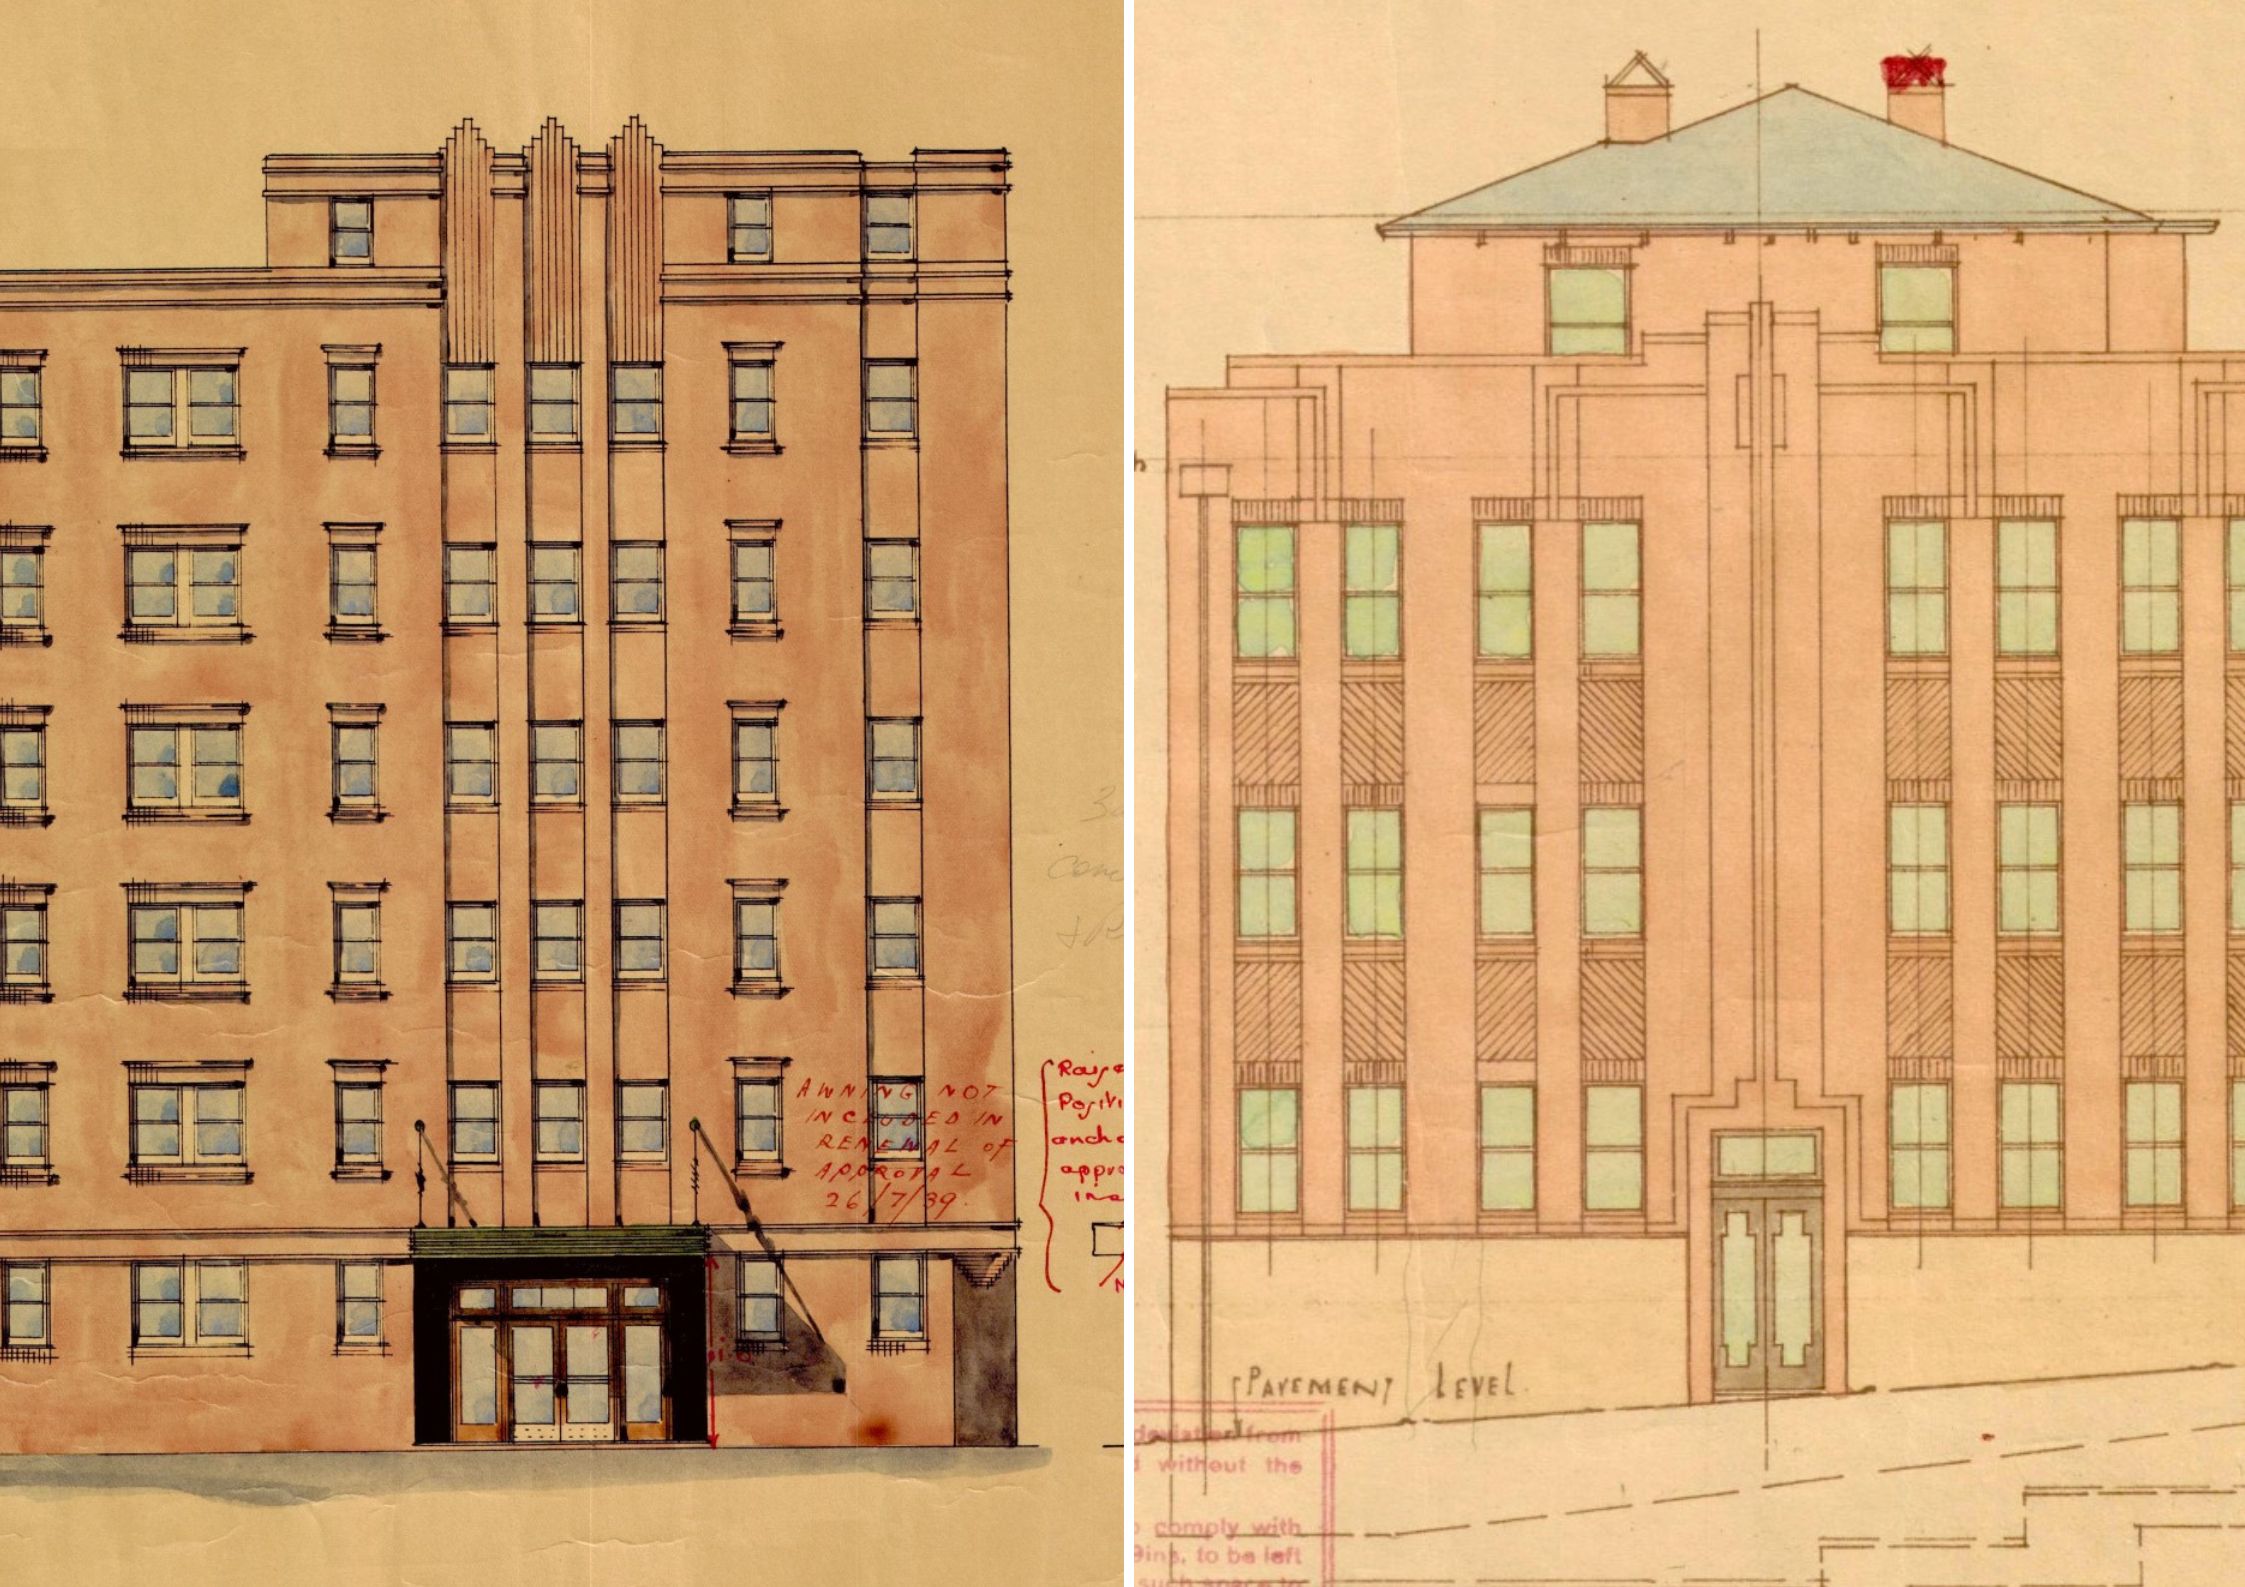 Plans of two Art Deco buildings